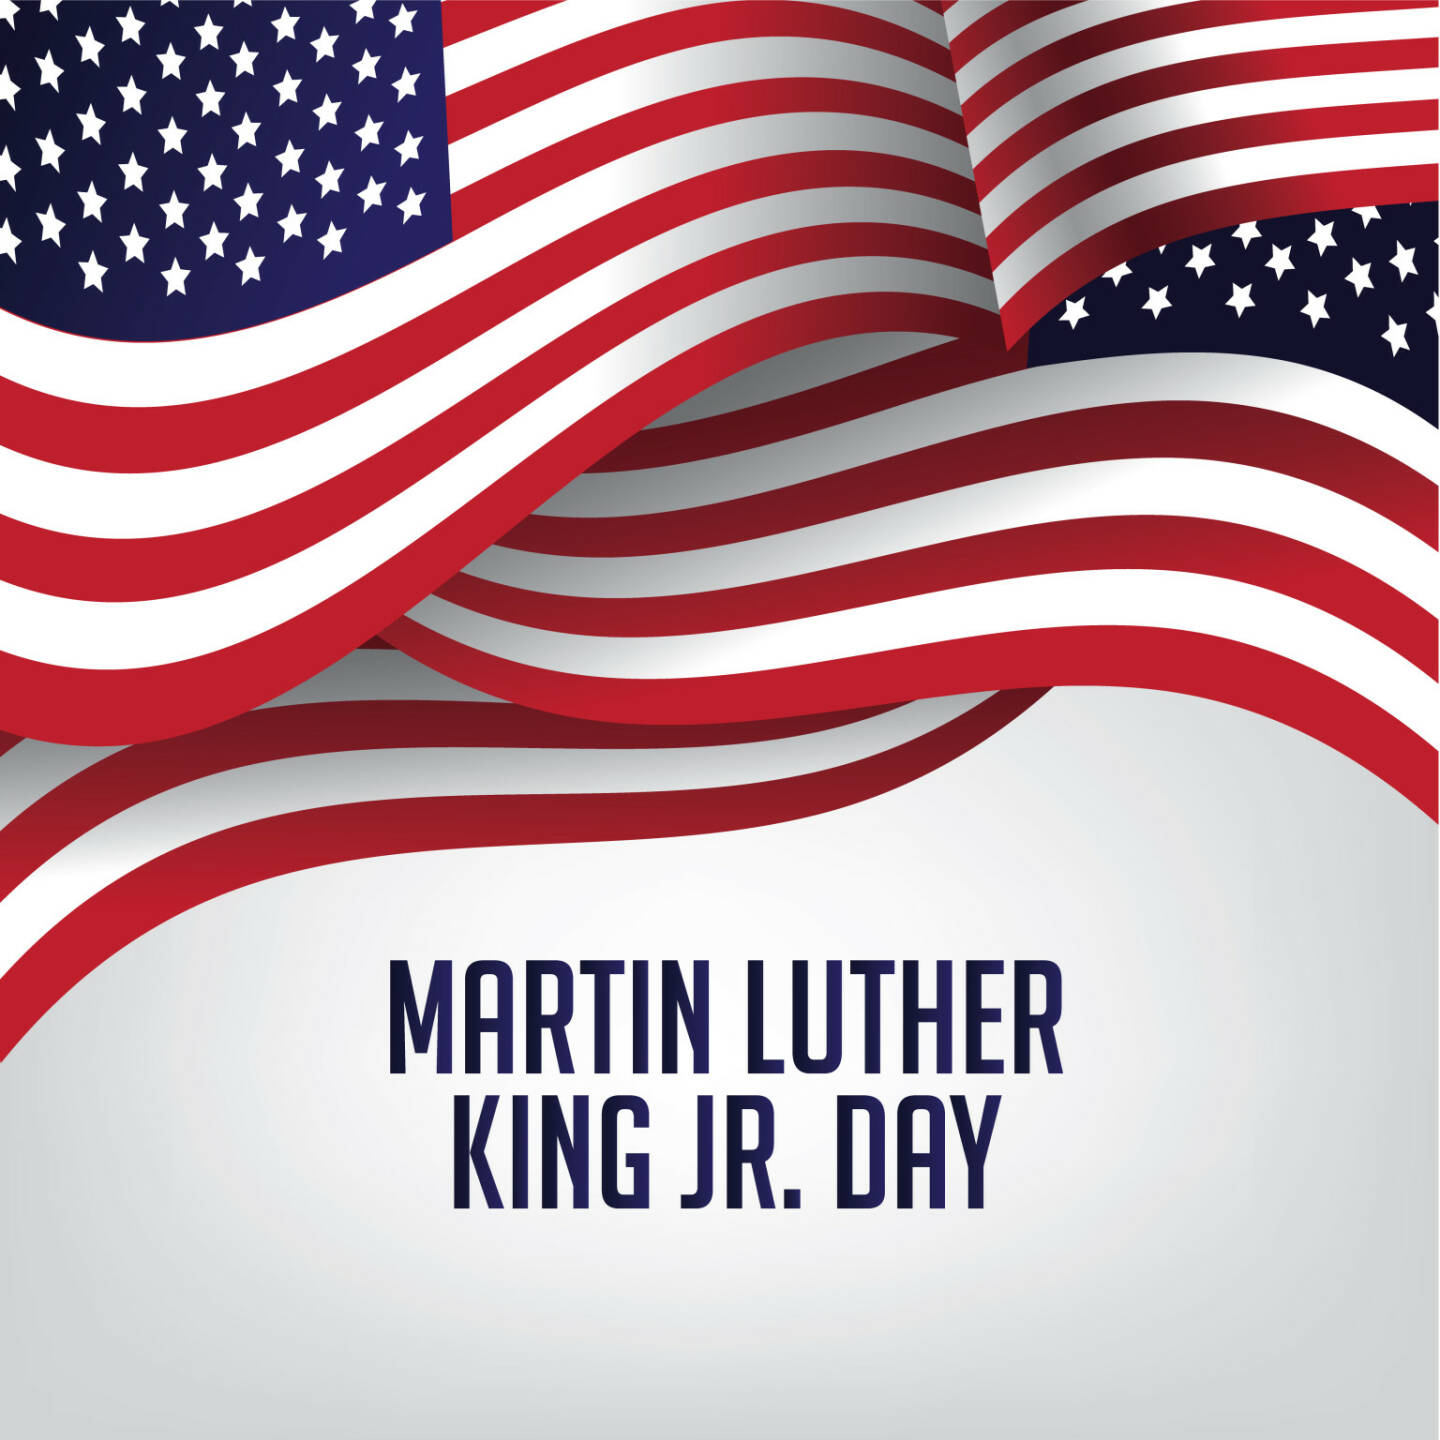 Martin Luther King Day, Amerikanische Flagge http://www.shutterstock.com/de/pic-351010019/stock-photo-martin-luther-king-day-american-flag-illustration.html